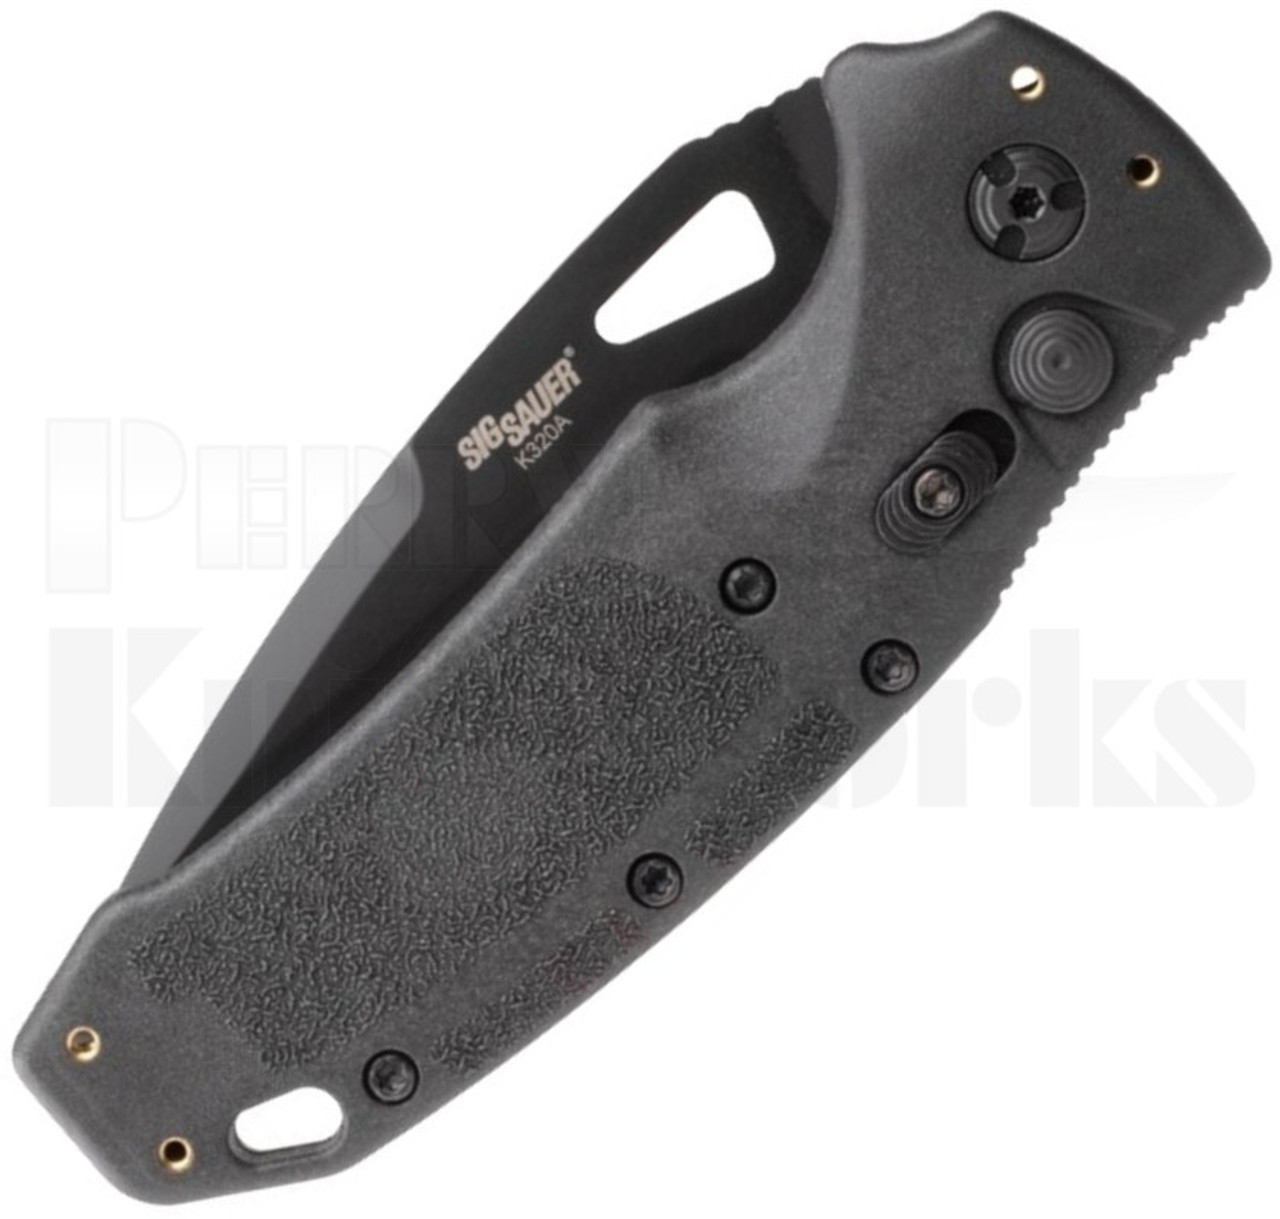 Hogue SIG K320A Automatic Knife Black 36330 l Closed